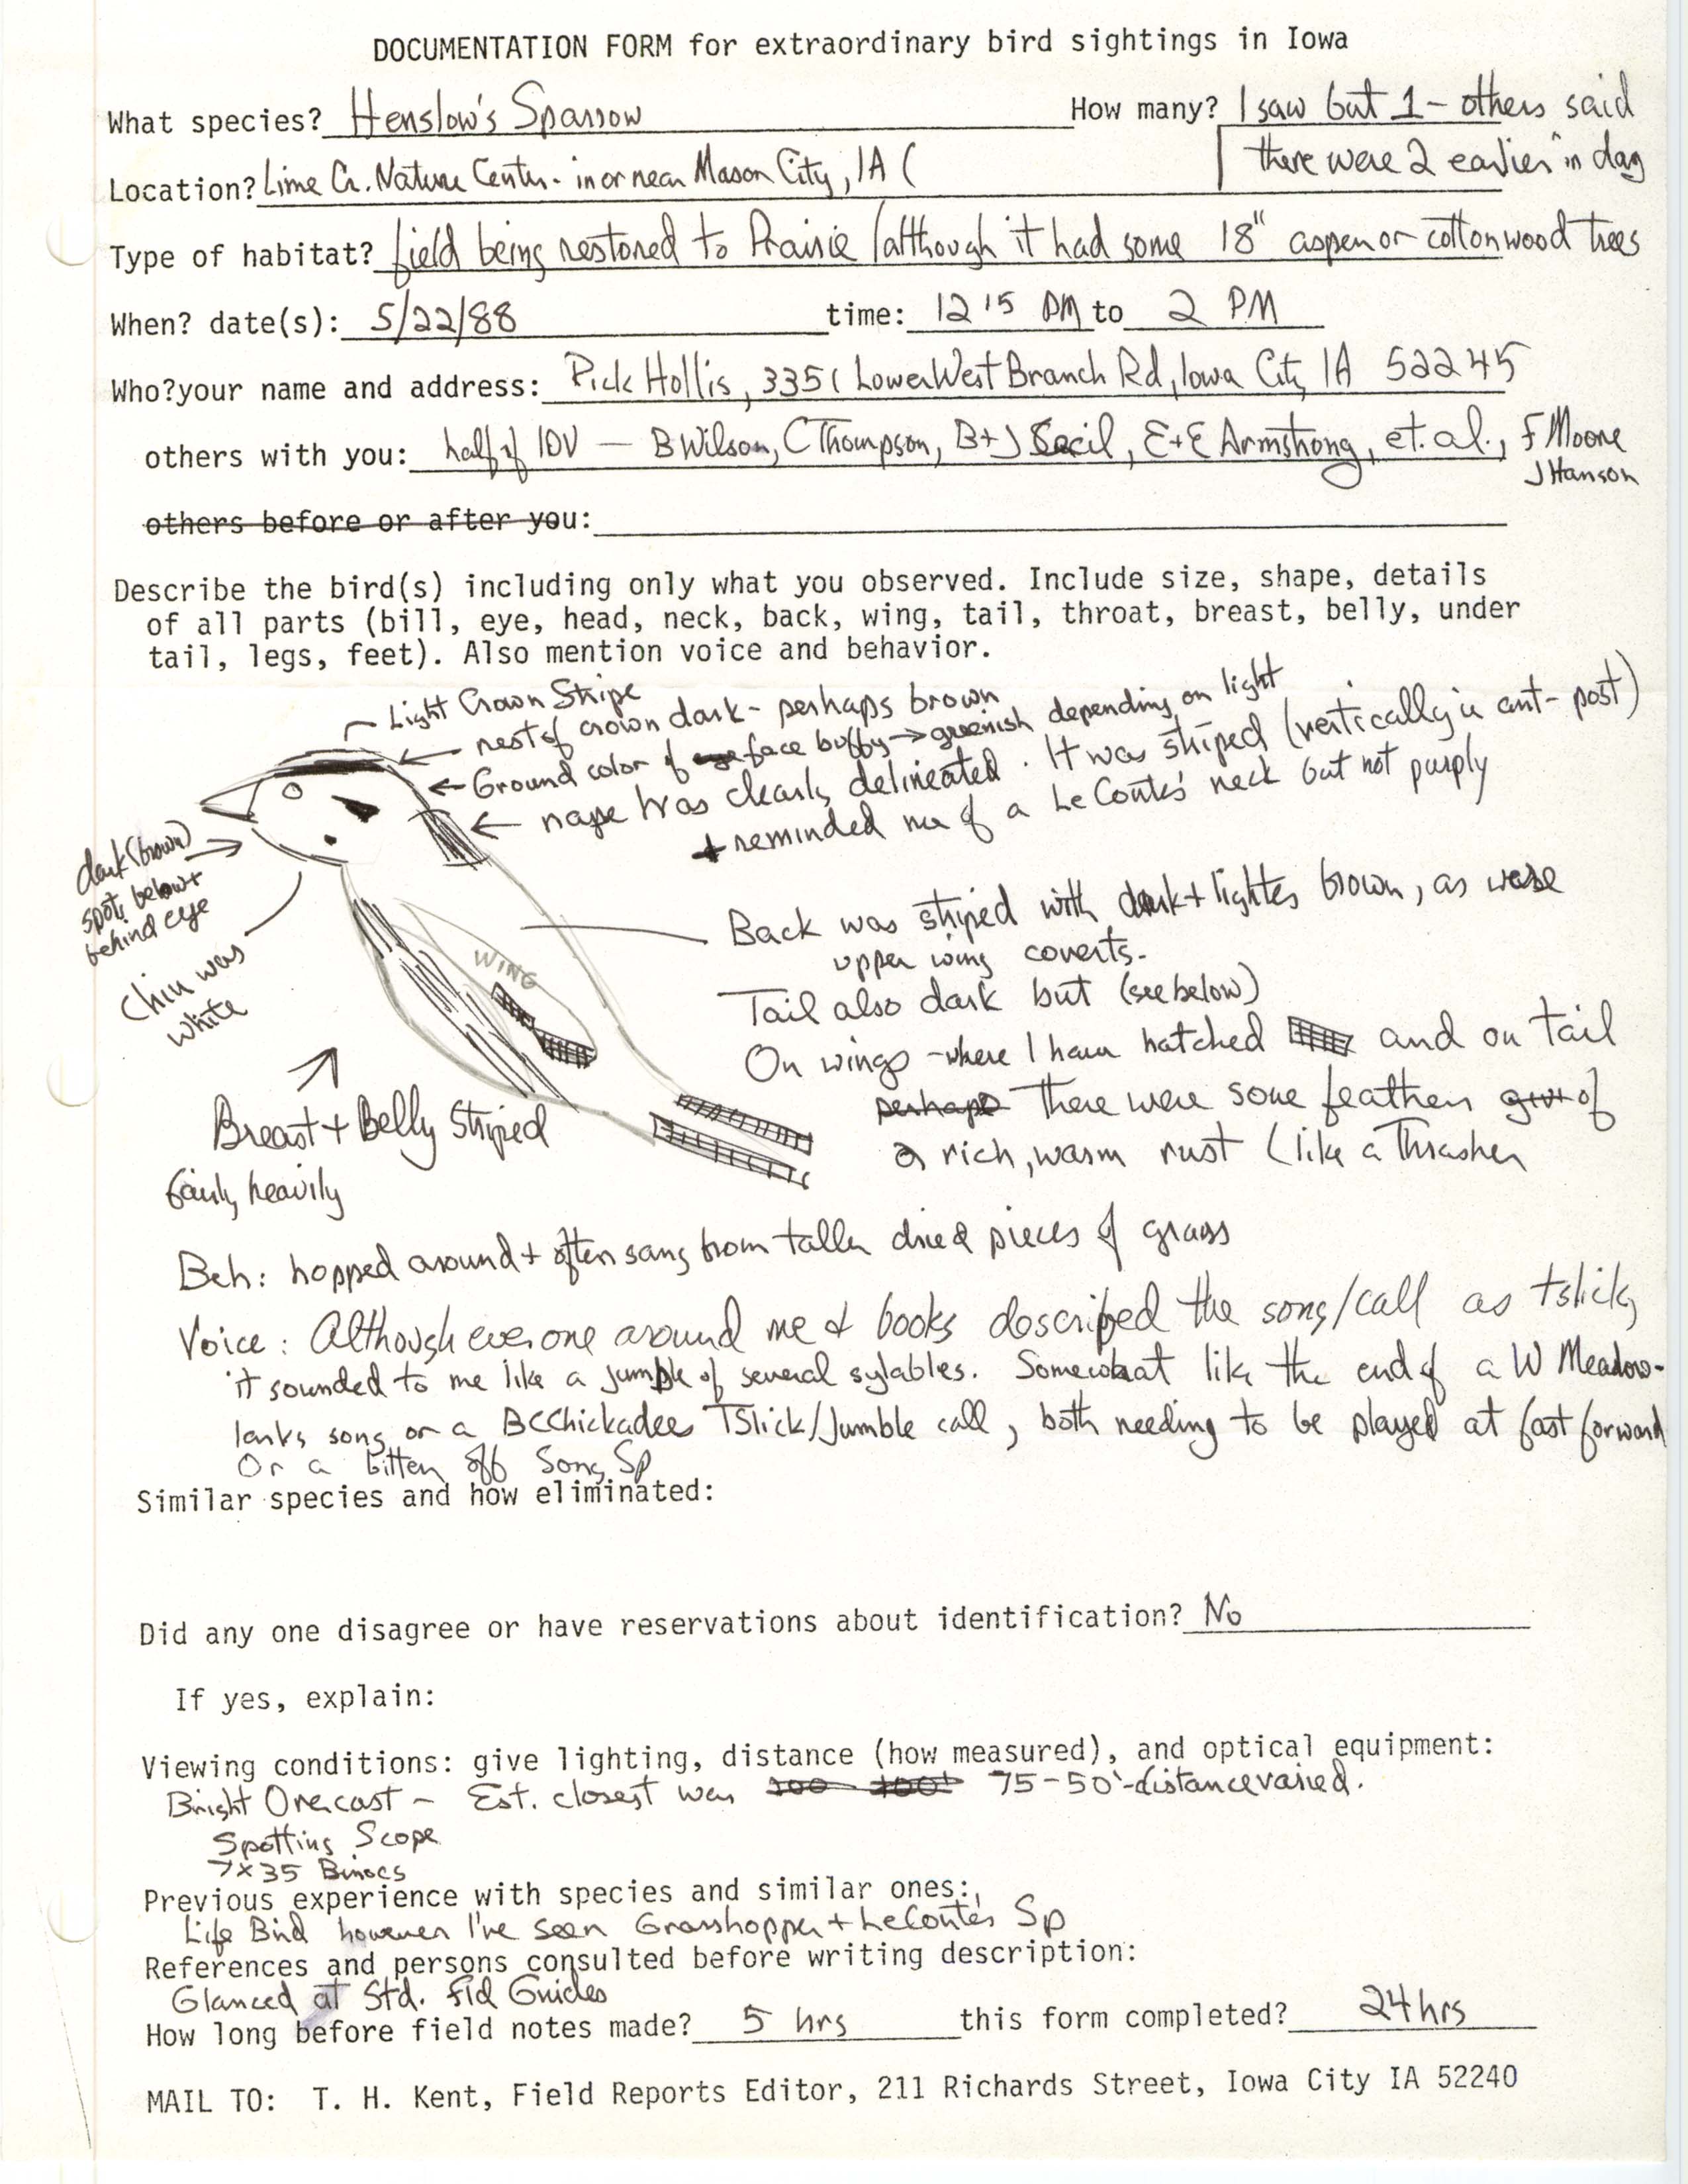 Rare bird documentation form for Henslow's Sparrow at Lime Creek Nature Center near Mason City, 1988